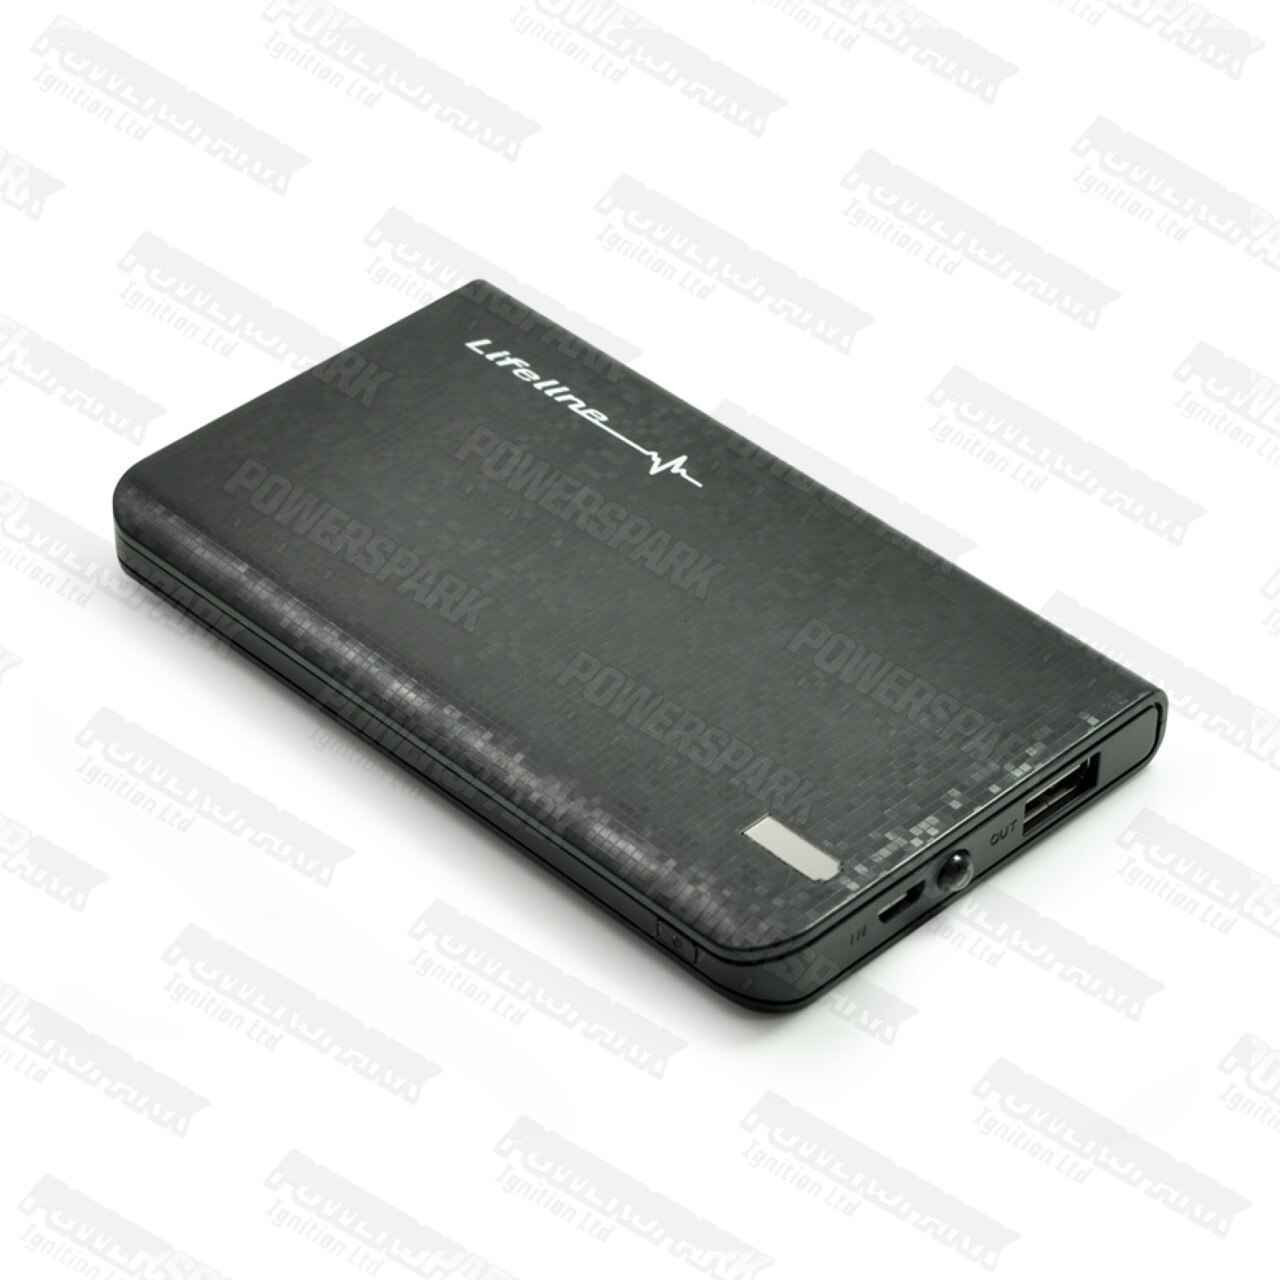 Lifeline Lifeline Pocket 6k 6,000mAh Portable Powerbank USB Battery Charger